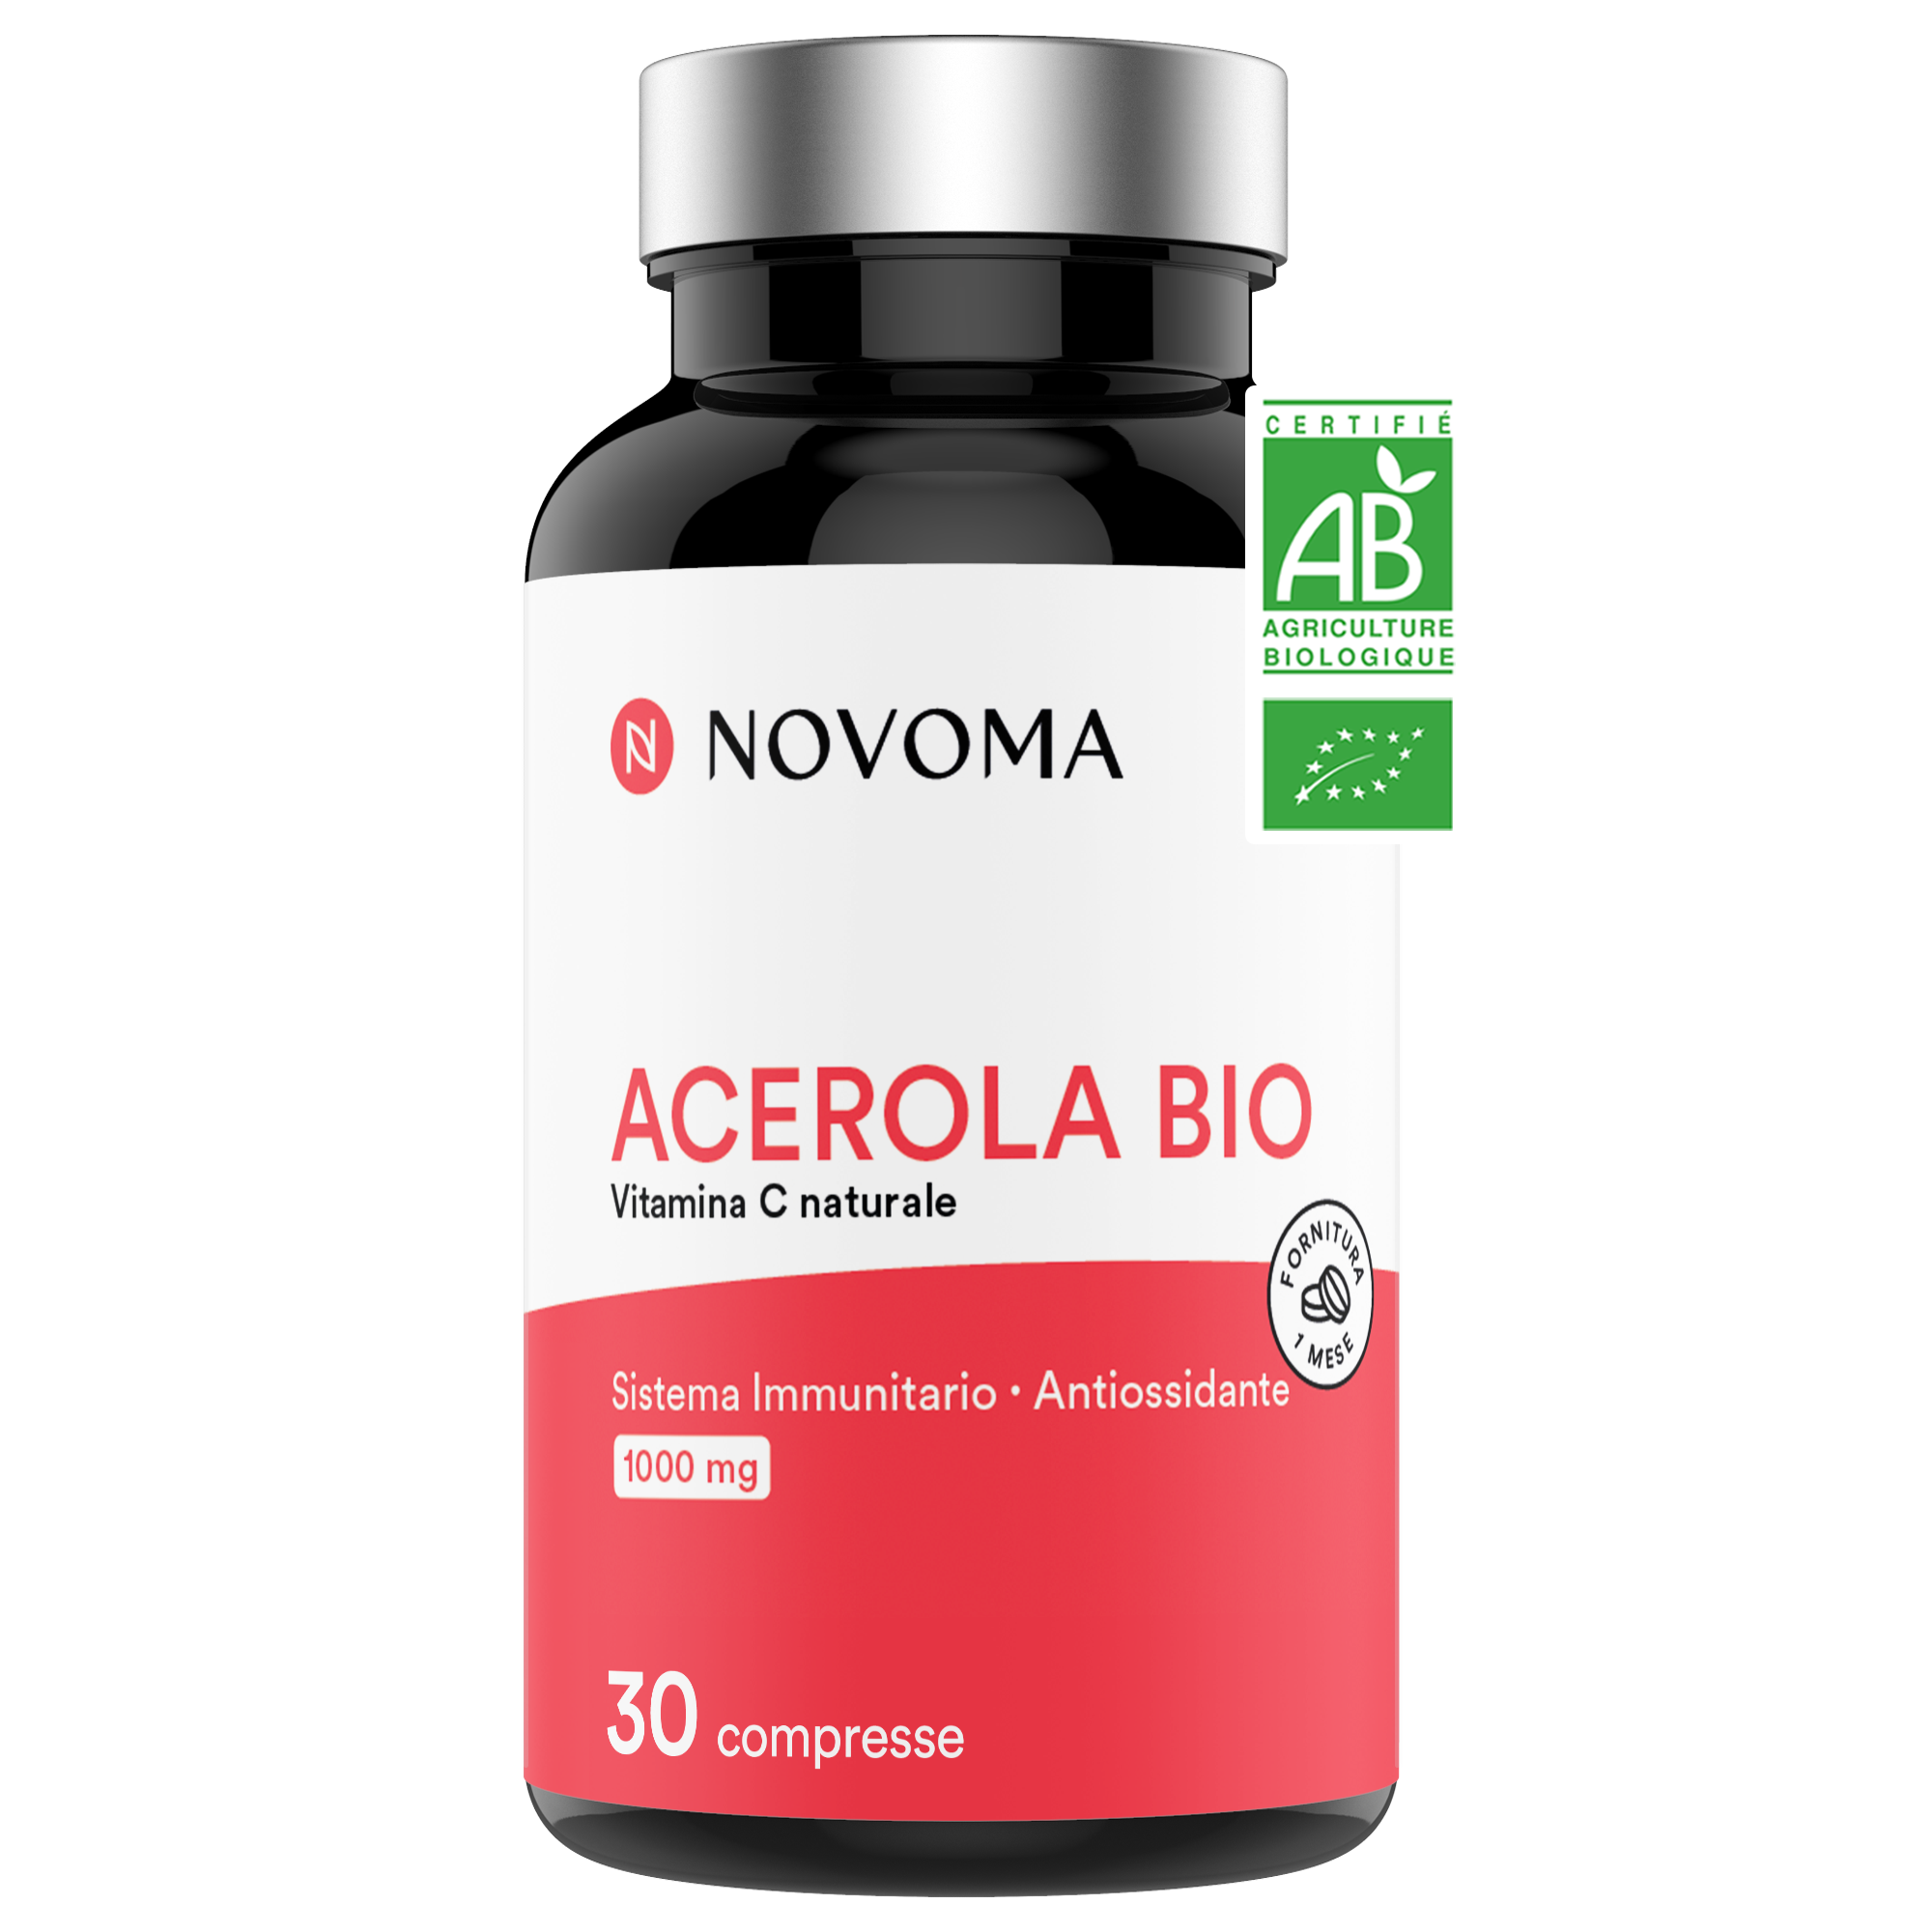 Acerola Bio 1000 mg - Vitamina C naturale: Benefici e Opinioni